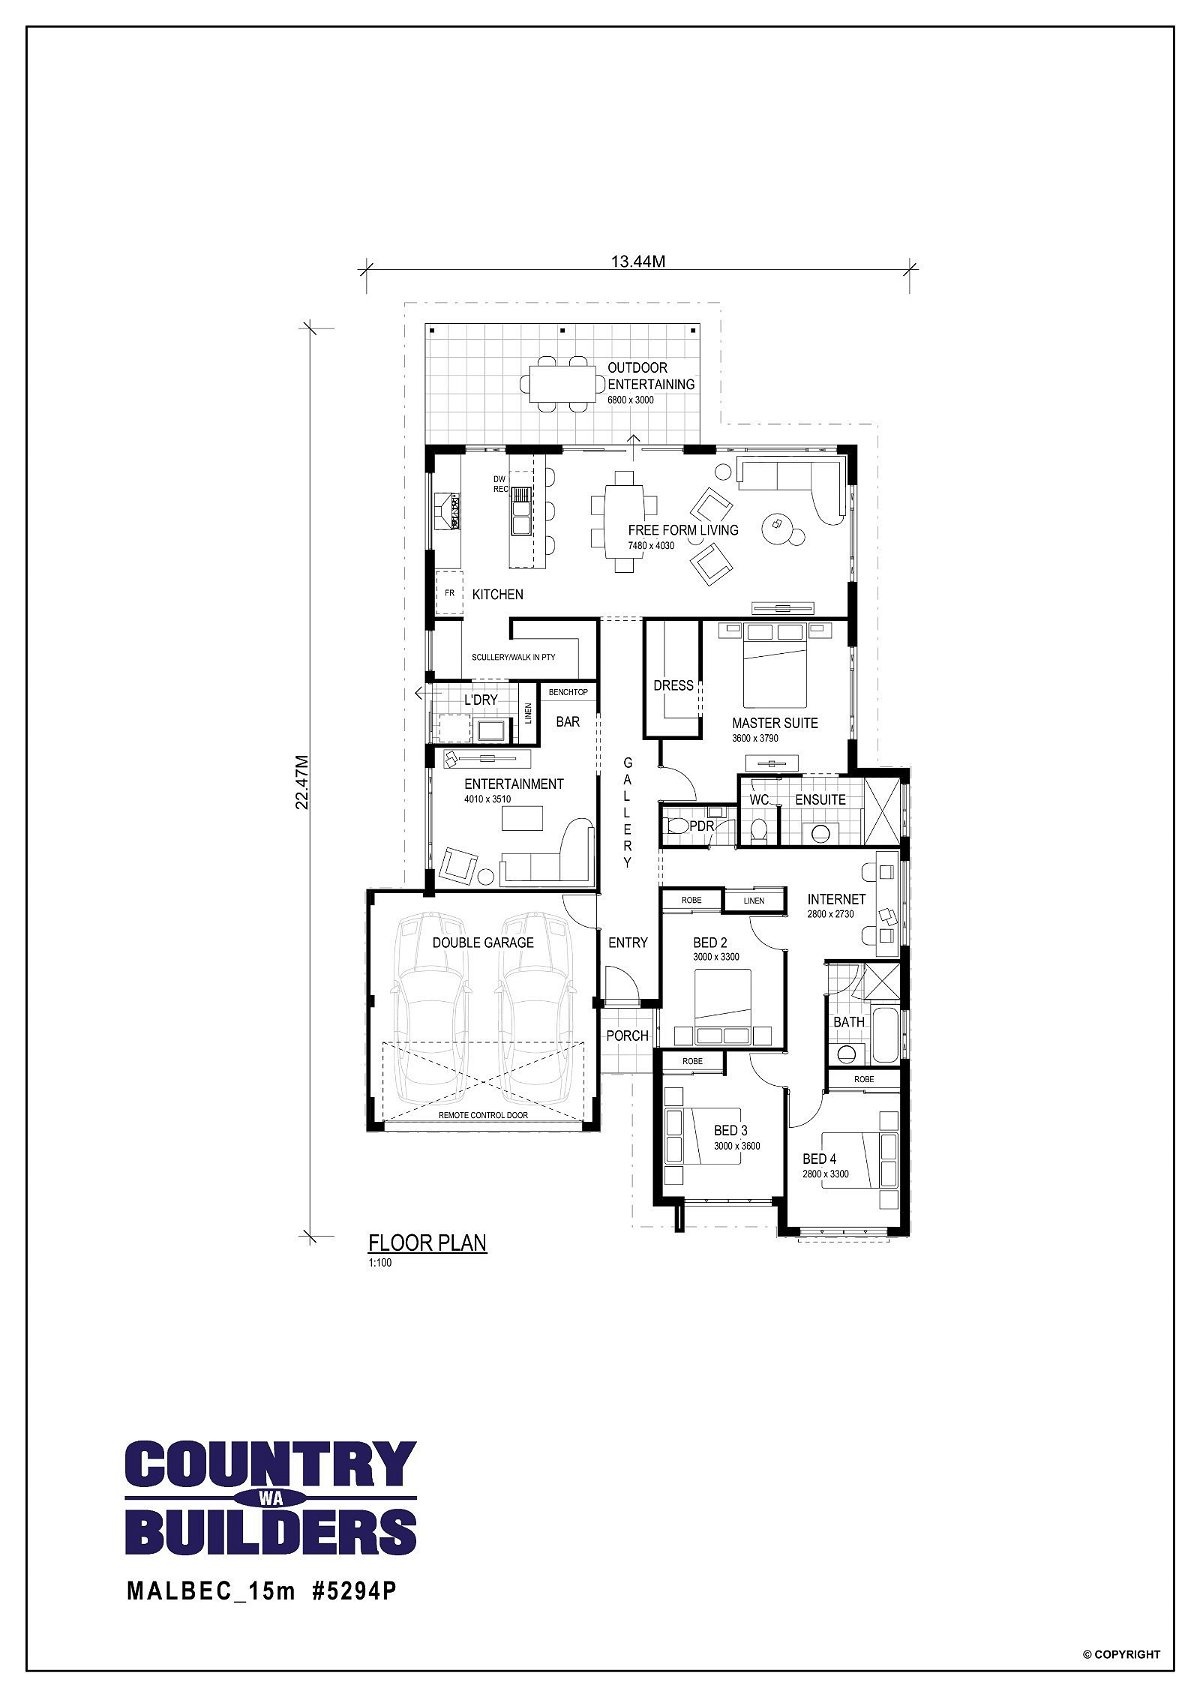 Wa Country Builders -  - Floorplan - 5294P Malbec 15M Brochure Artwork